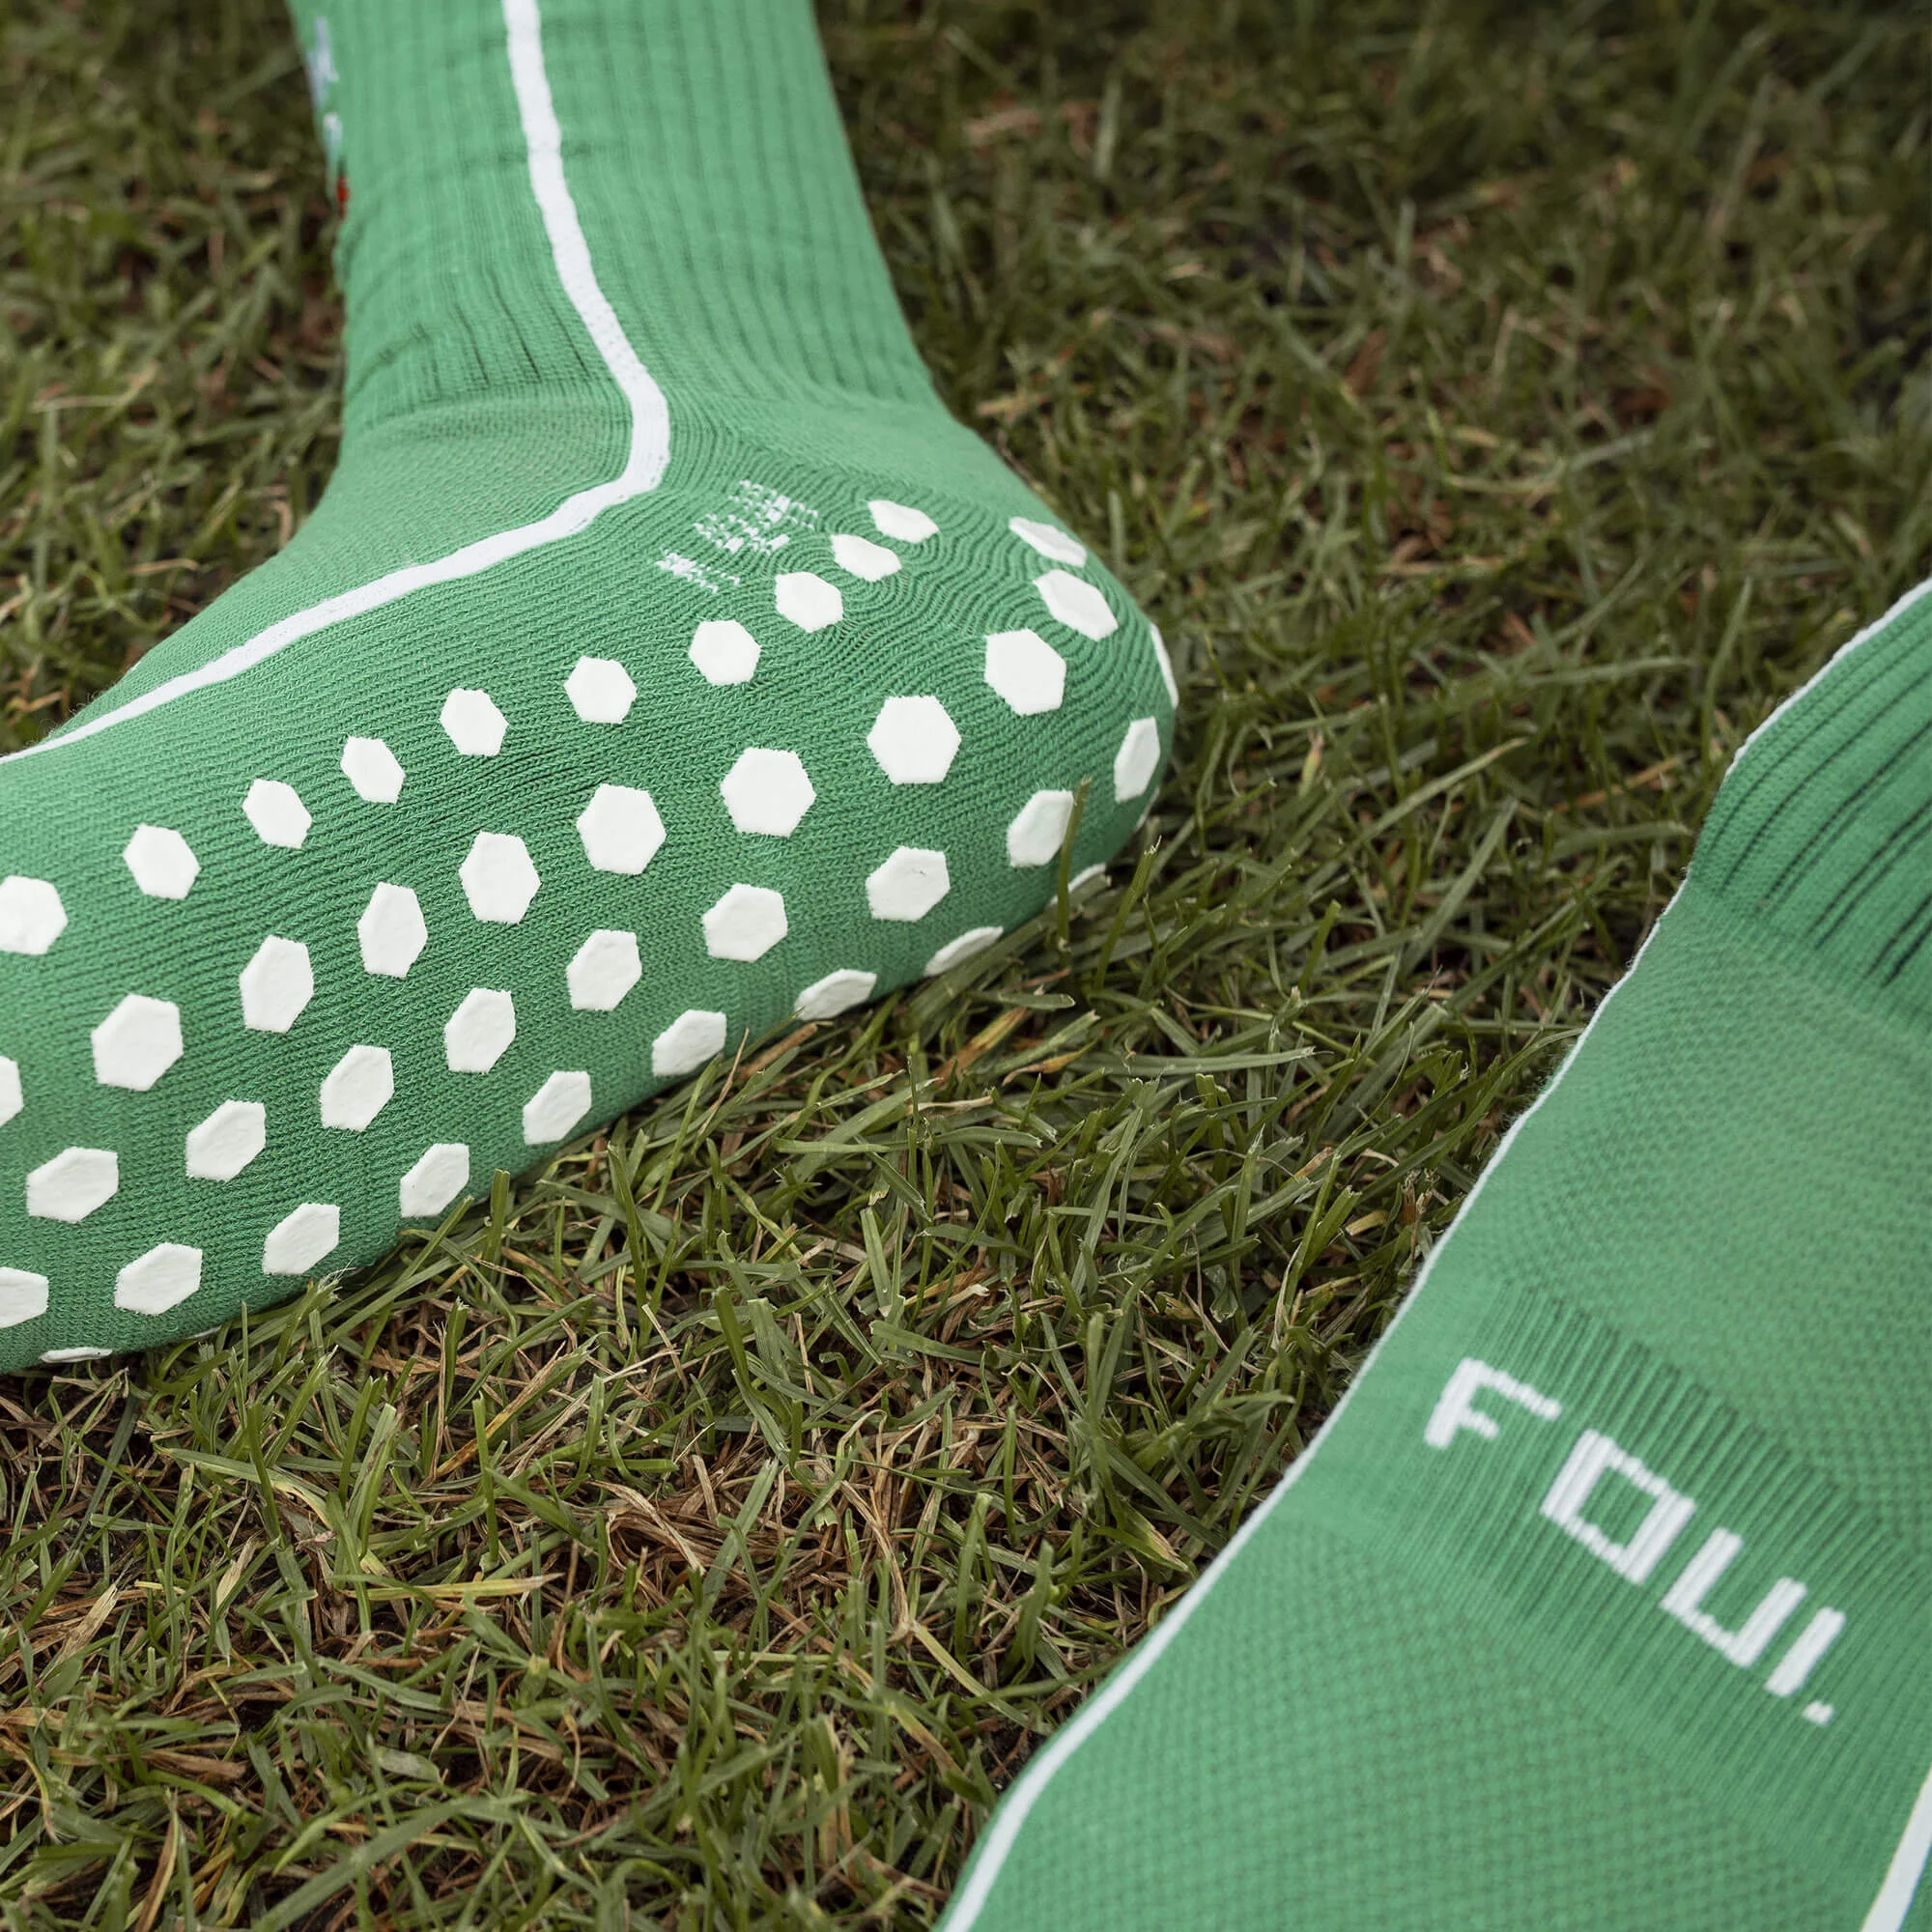 Football grip socks FOUL (5)